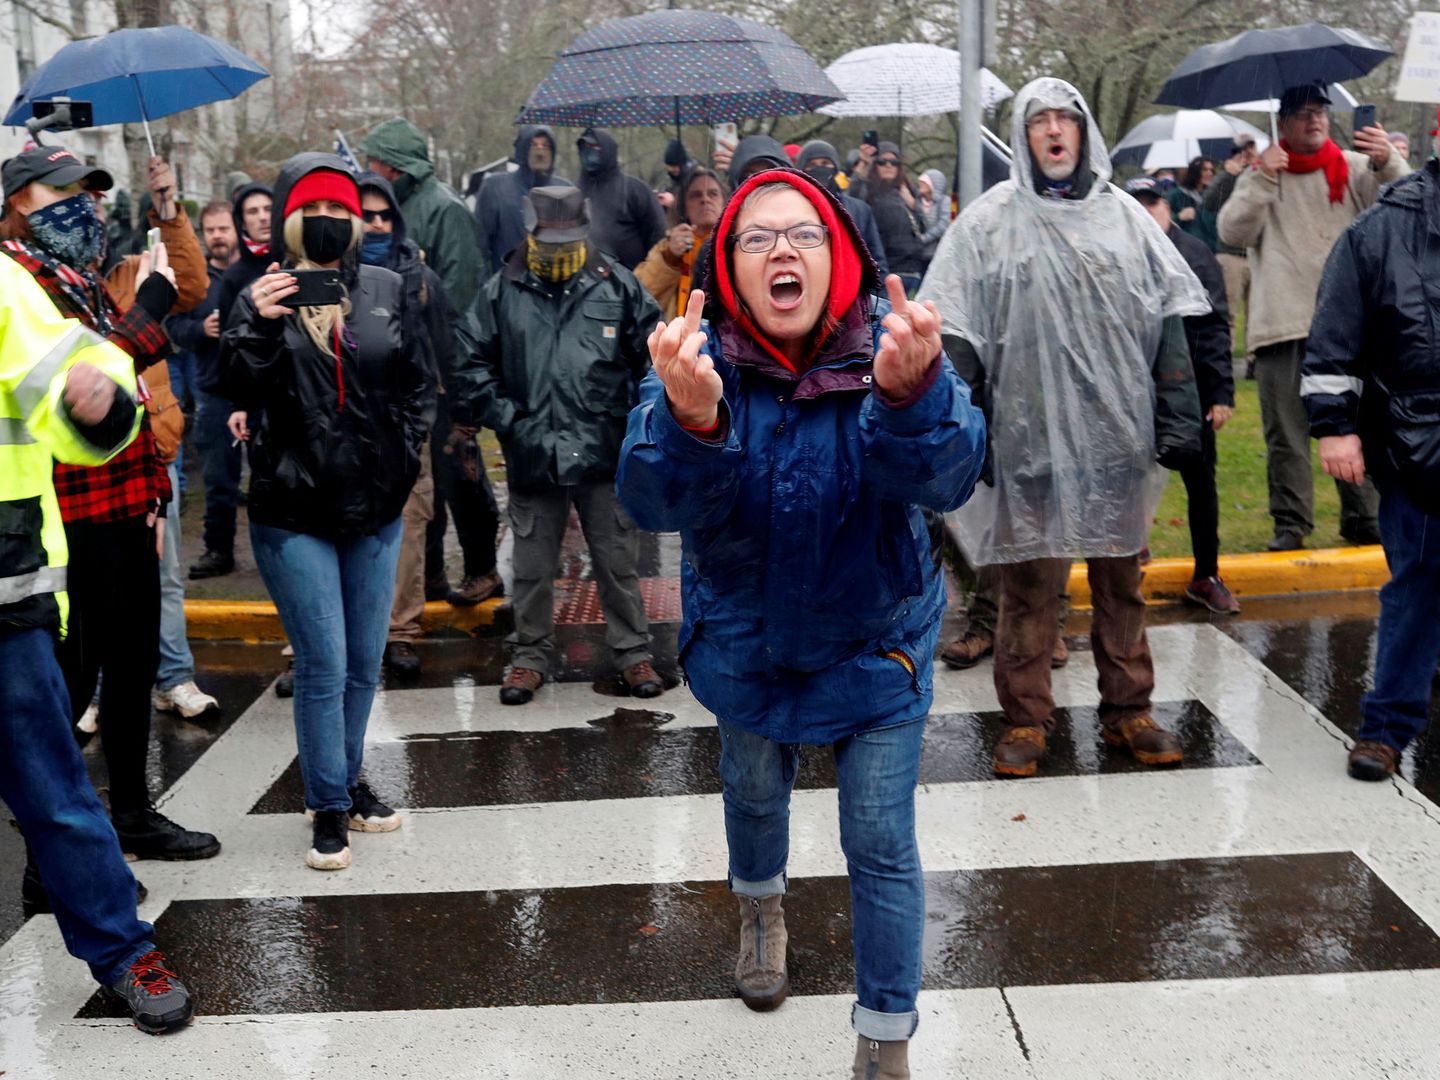 Partidarios de Donald Trump se enfrentan a manifestantes en su contra en Salem, Oregon. (Reuters)